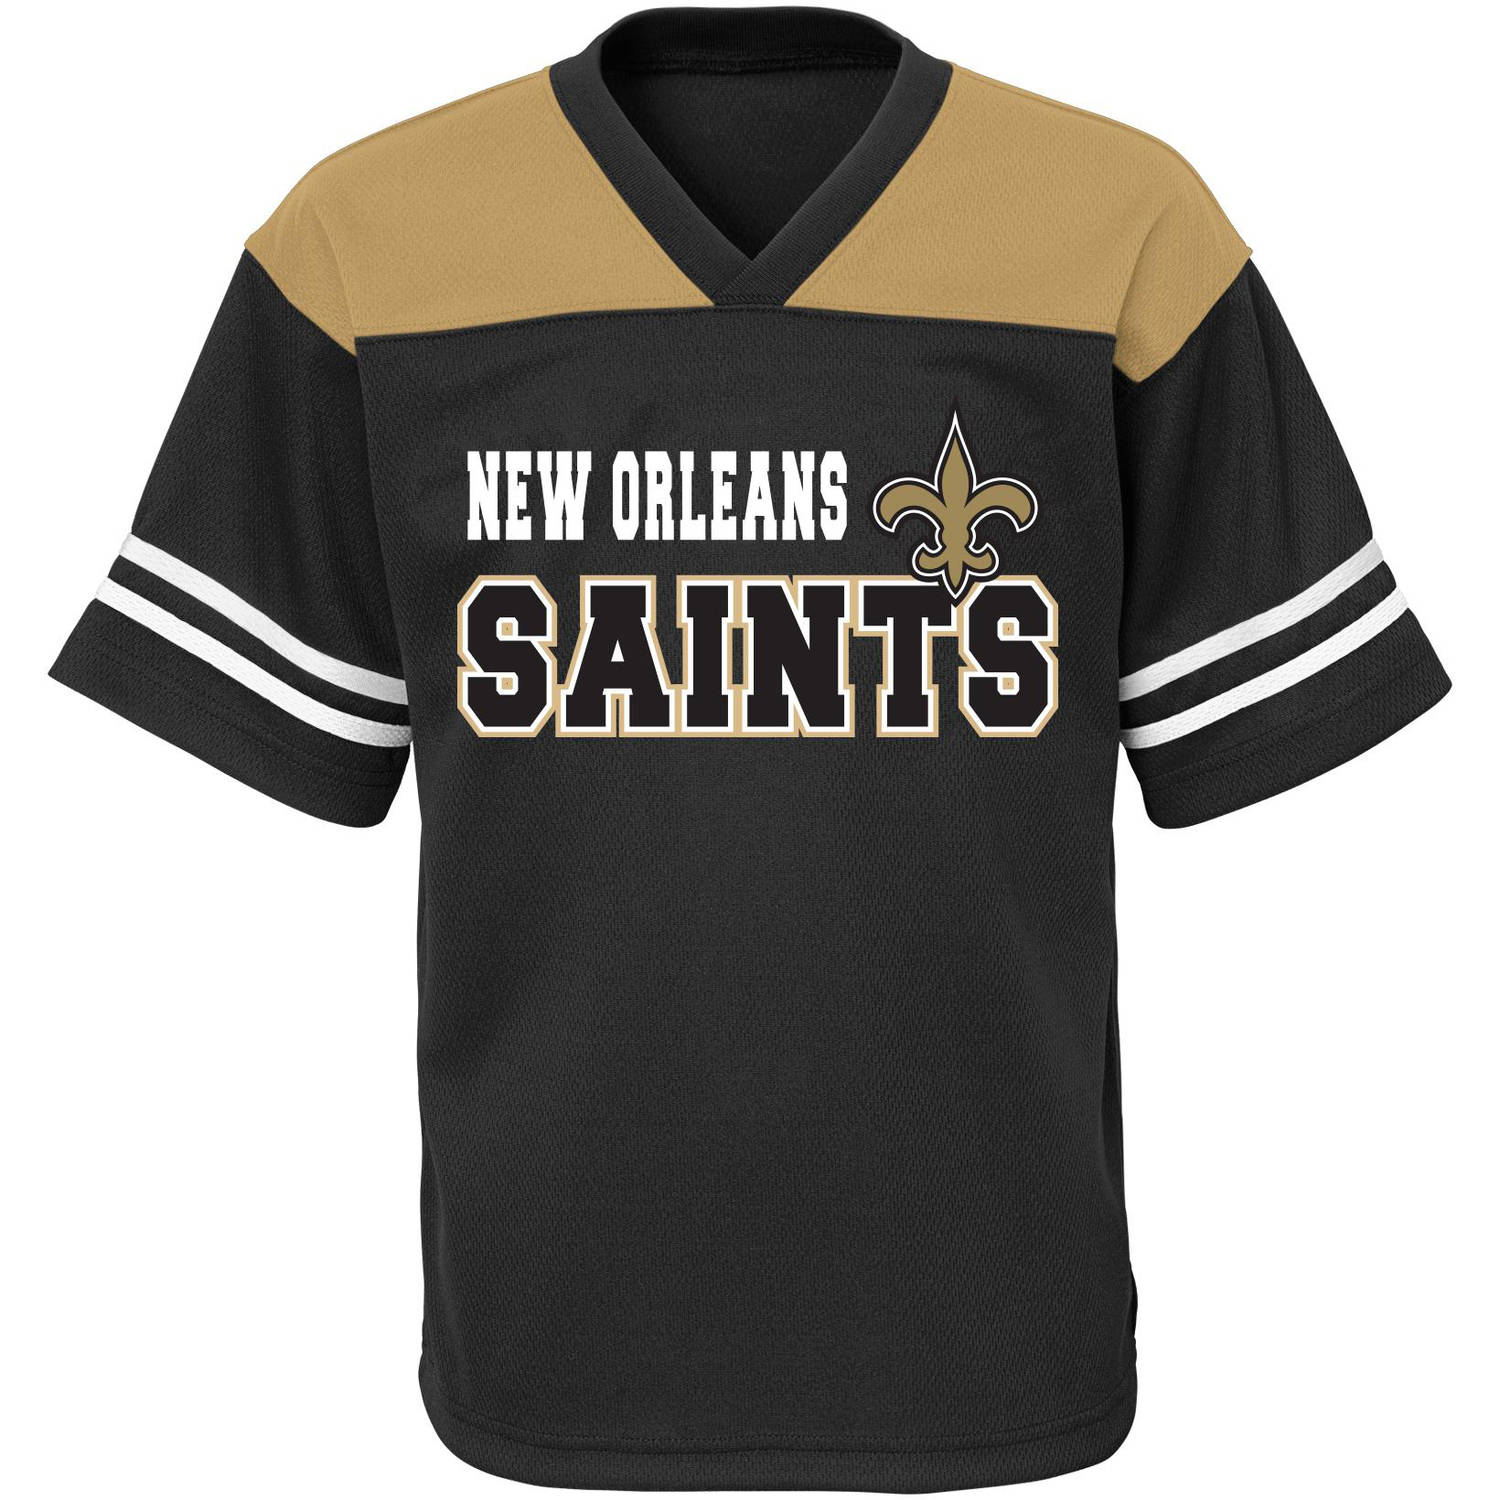 NFL Boys' New Orleans Saints Short Sleeve Mesh Team Top - image 1 of 1